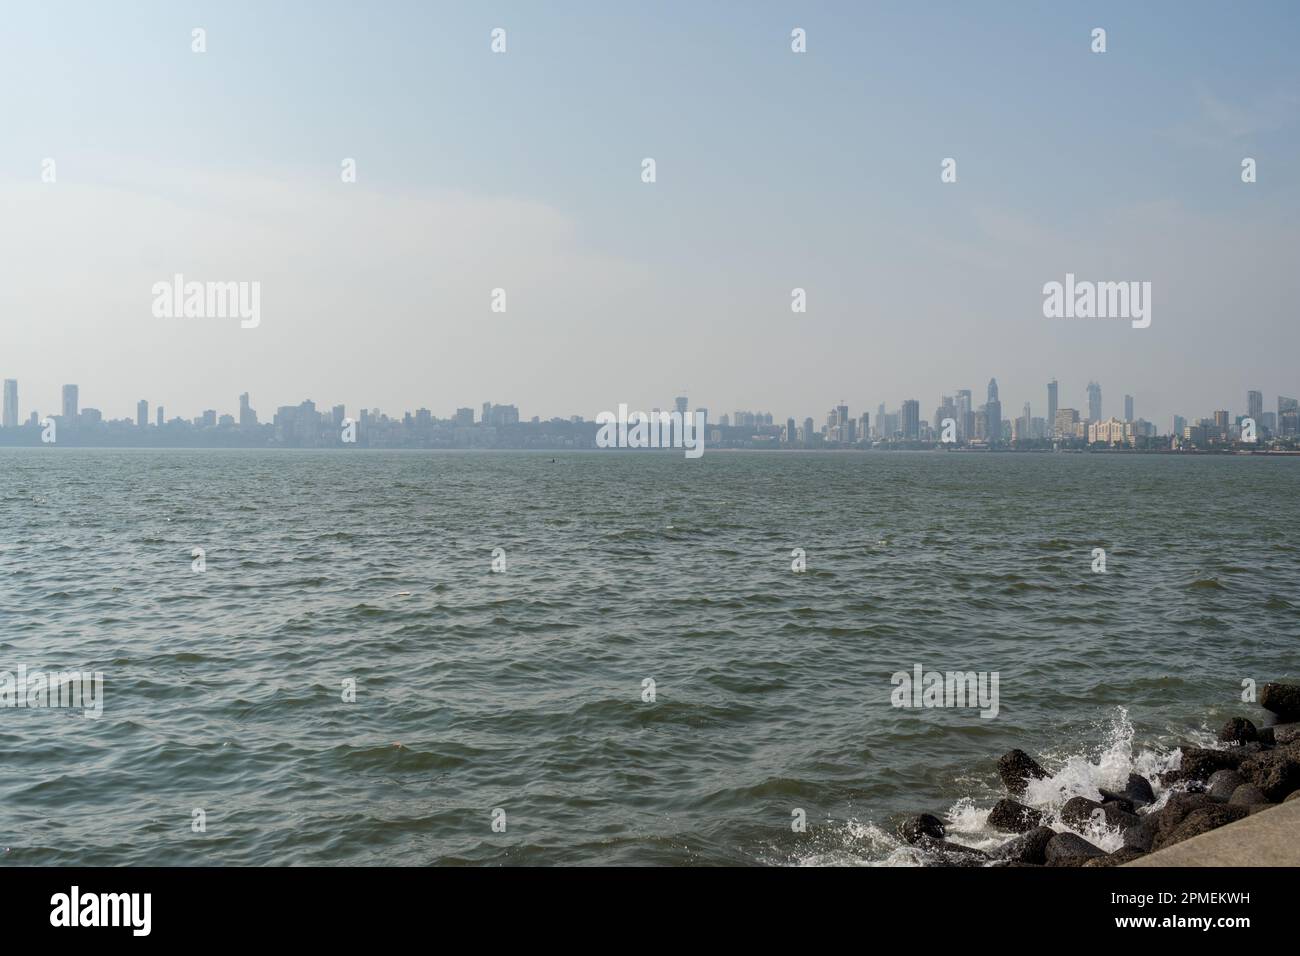 Beautiful urban landscape of the skyline of Mumbai from Nariman Point in Mumbai, India along the Arabian sea Stock Photo